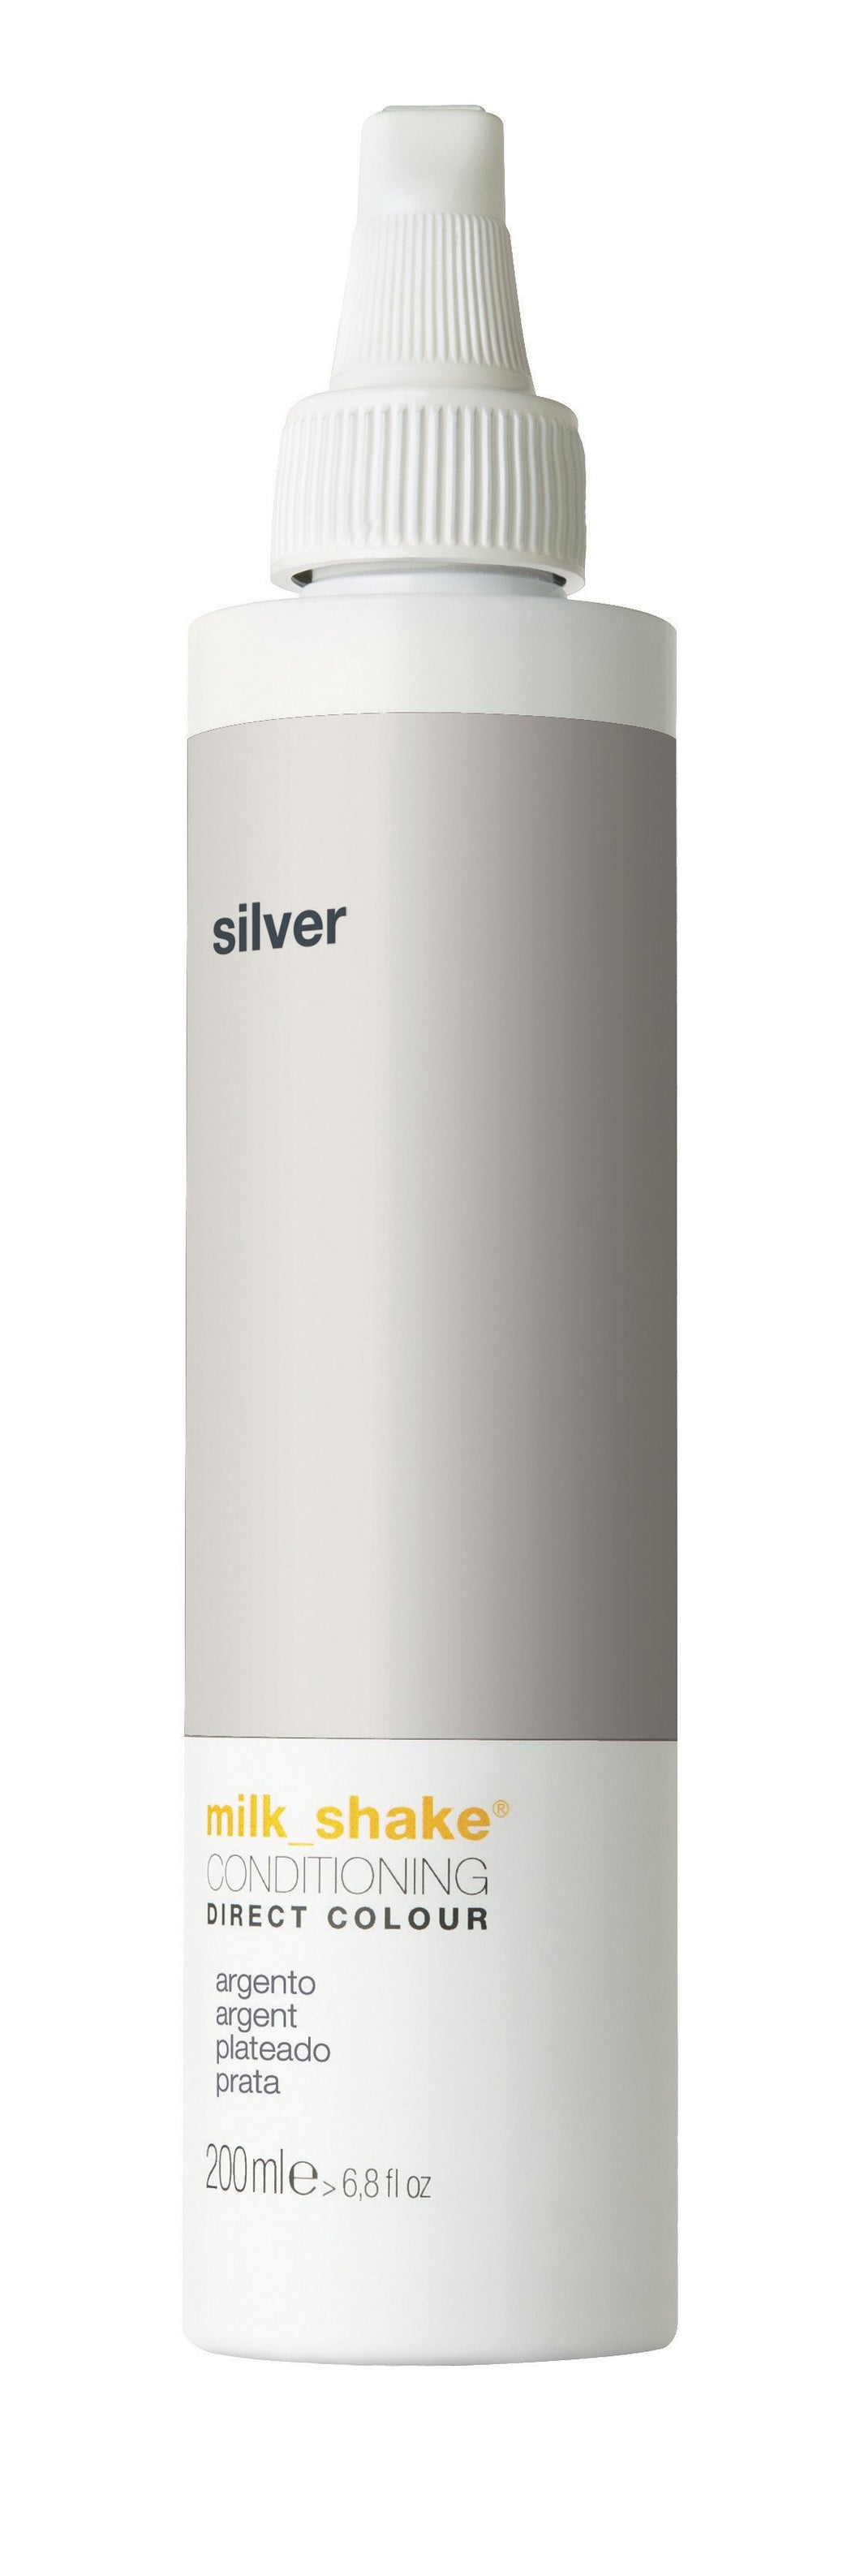 milk_shake direct colour argento / silver-0